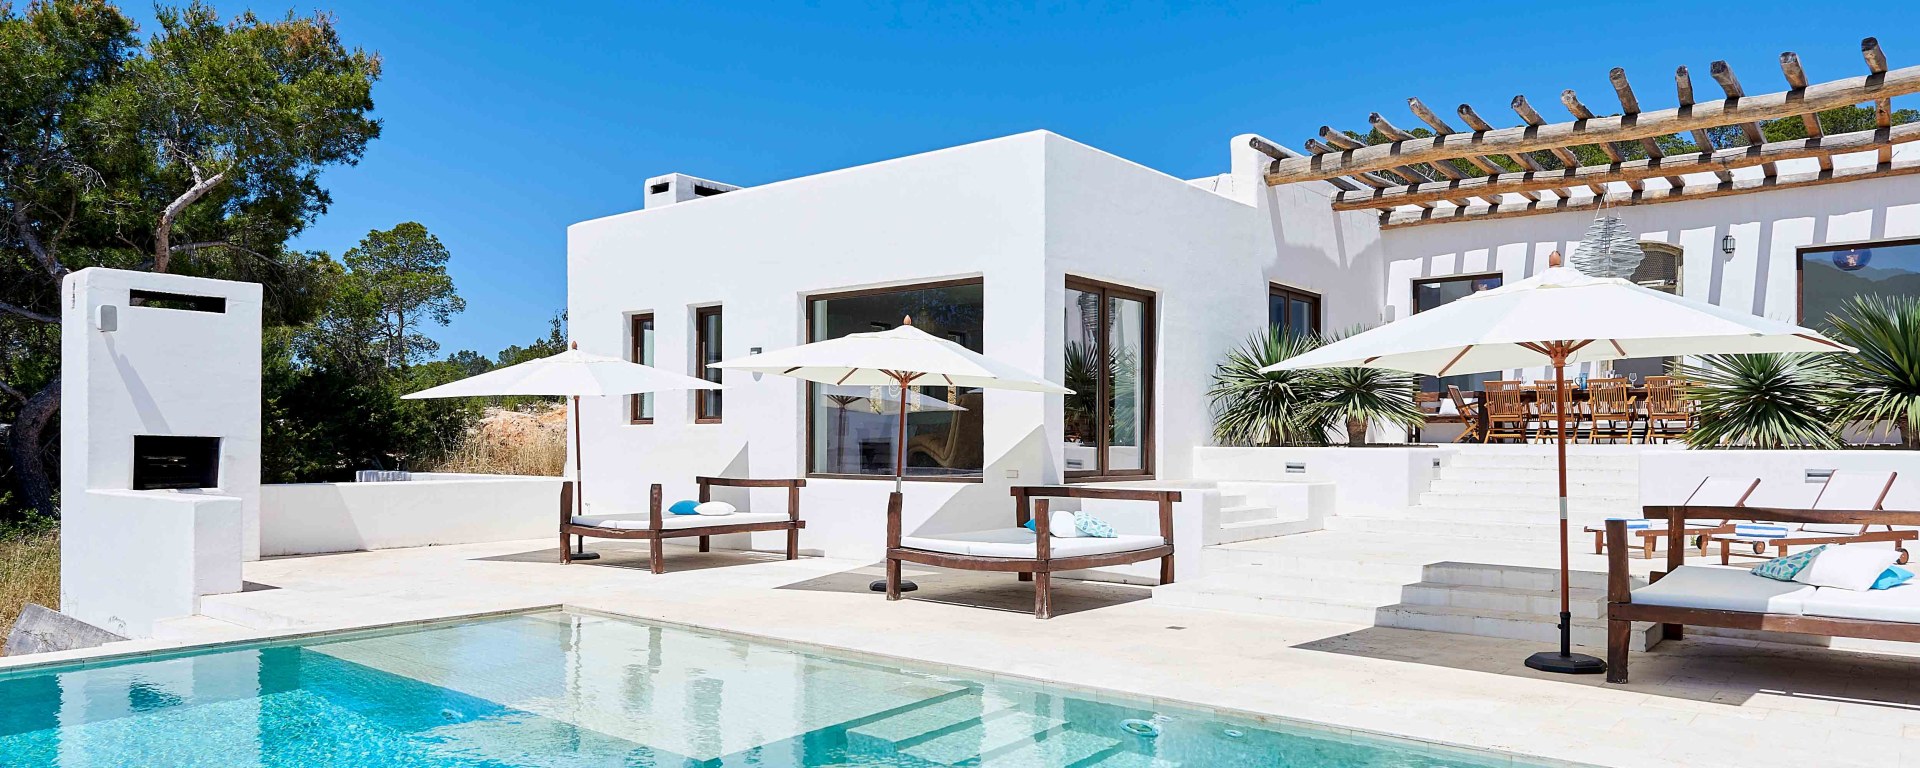 Moderne Ferienvilla Ibiza Mieten 2